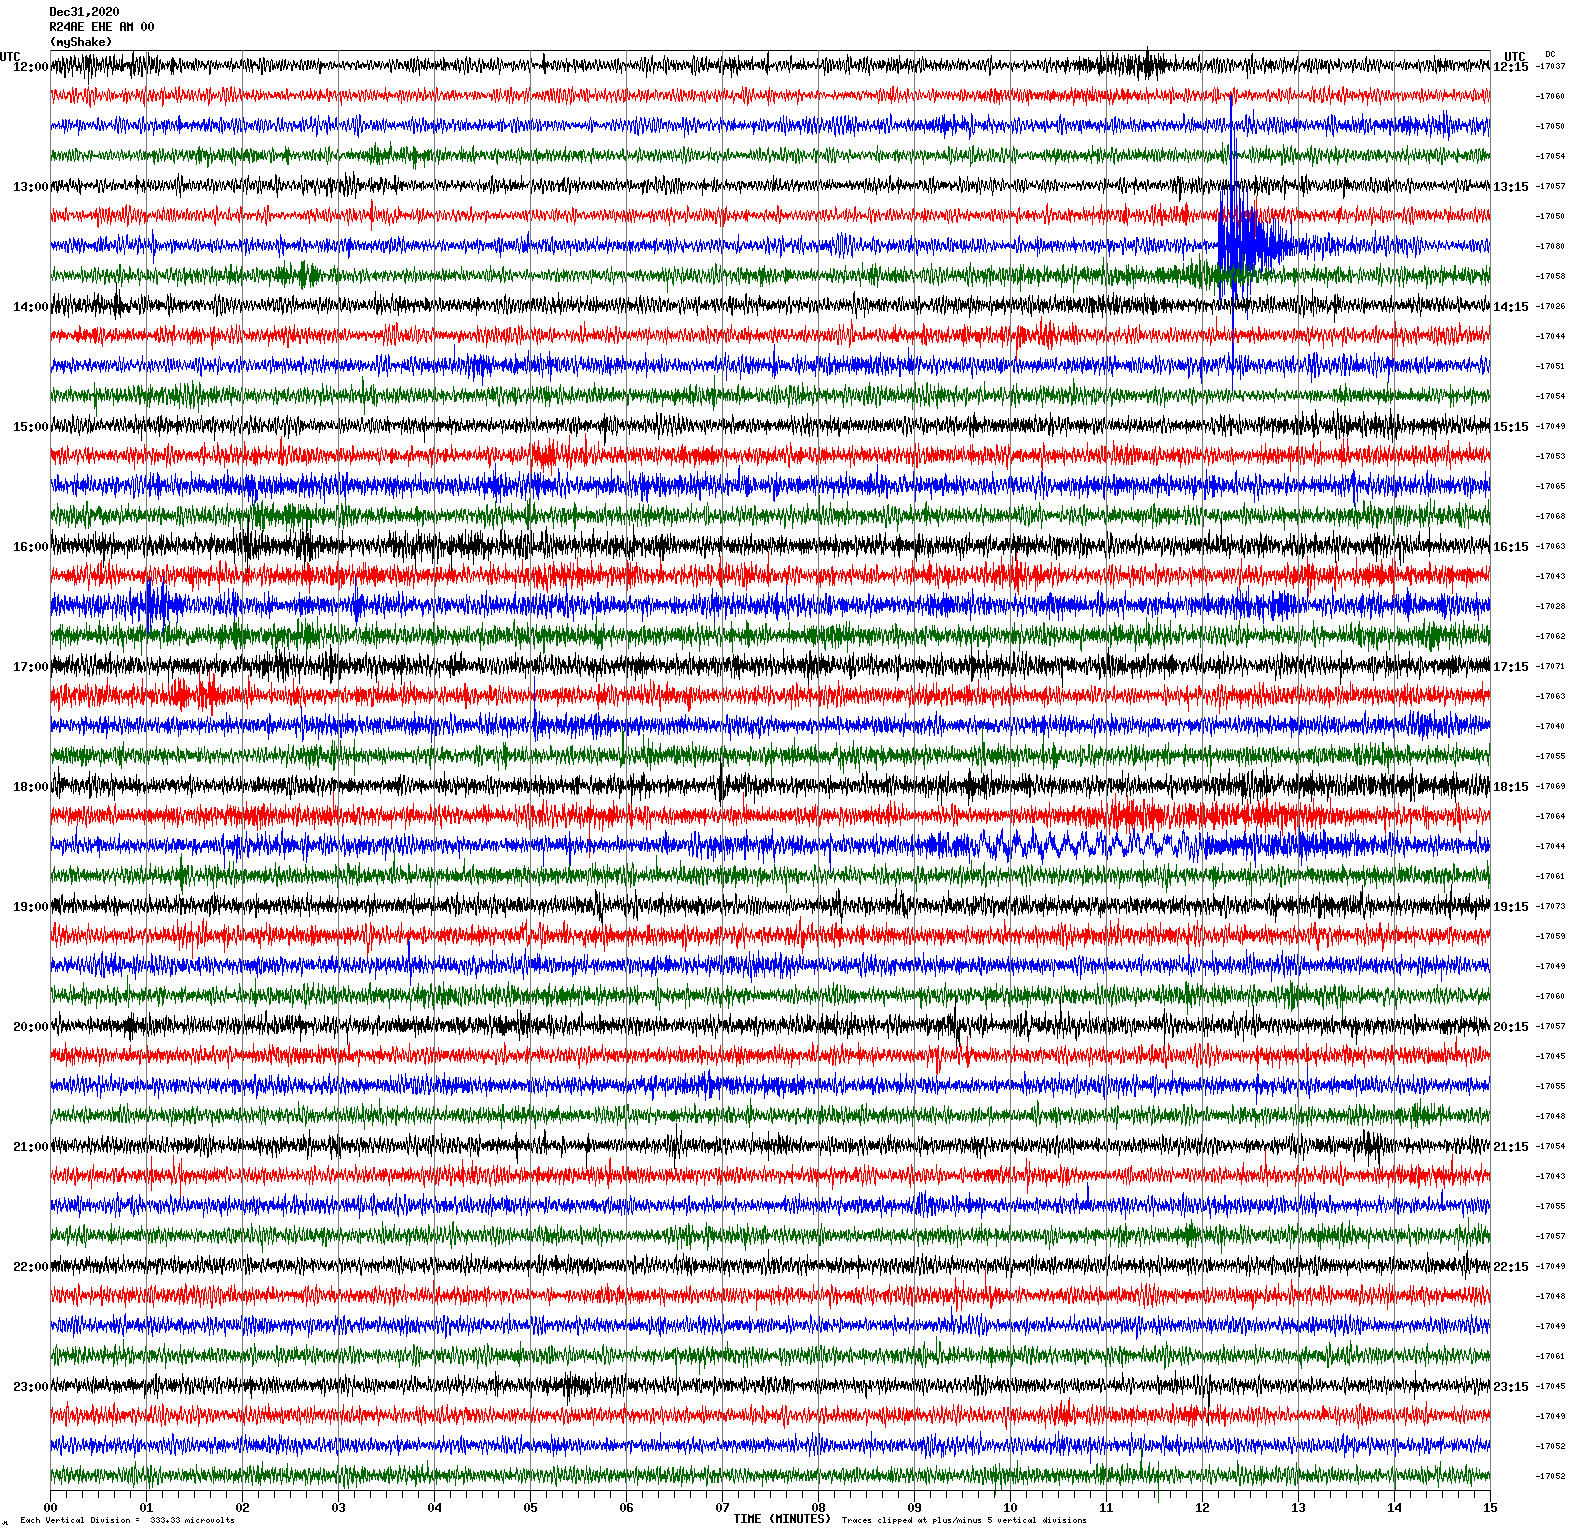 /seismic-data/R24AE/R24AE_EHE_AM_00.2020123112.gif